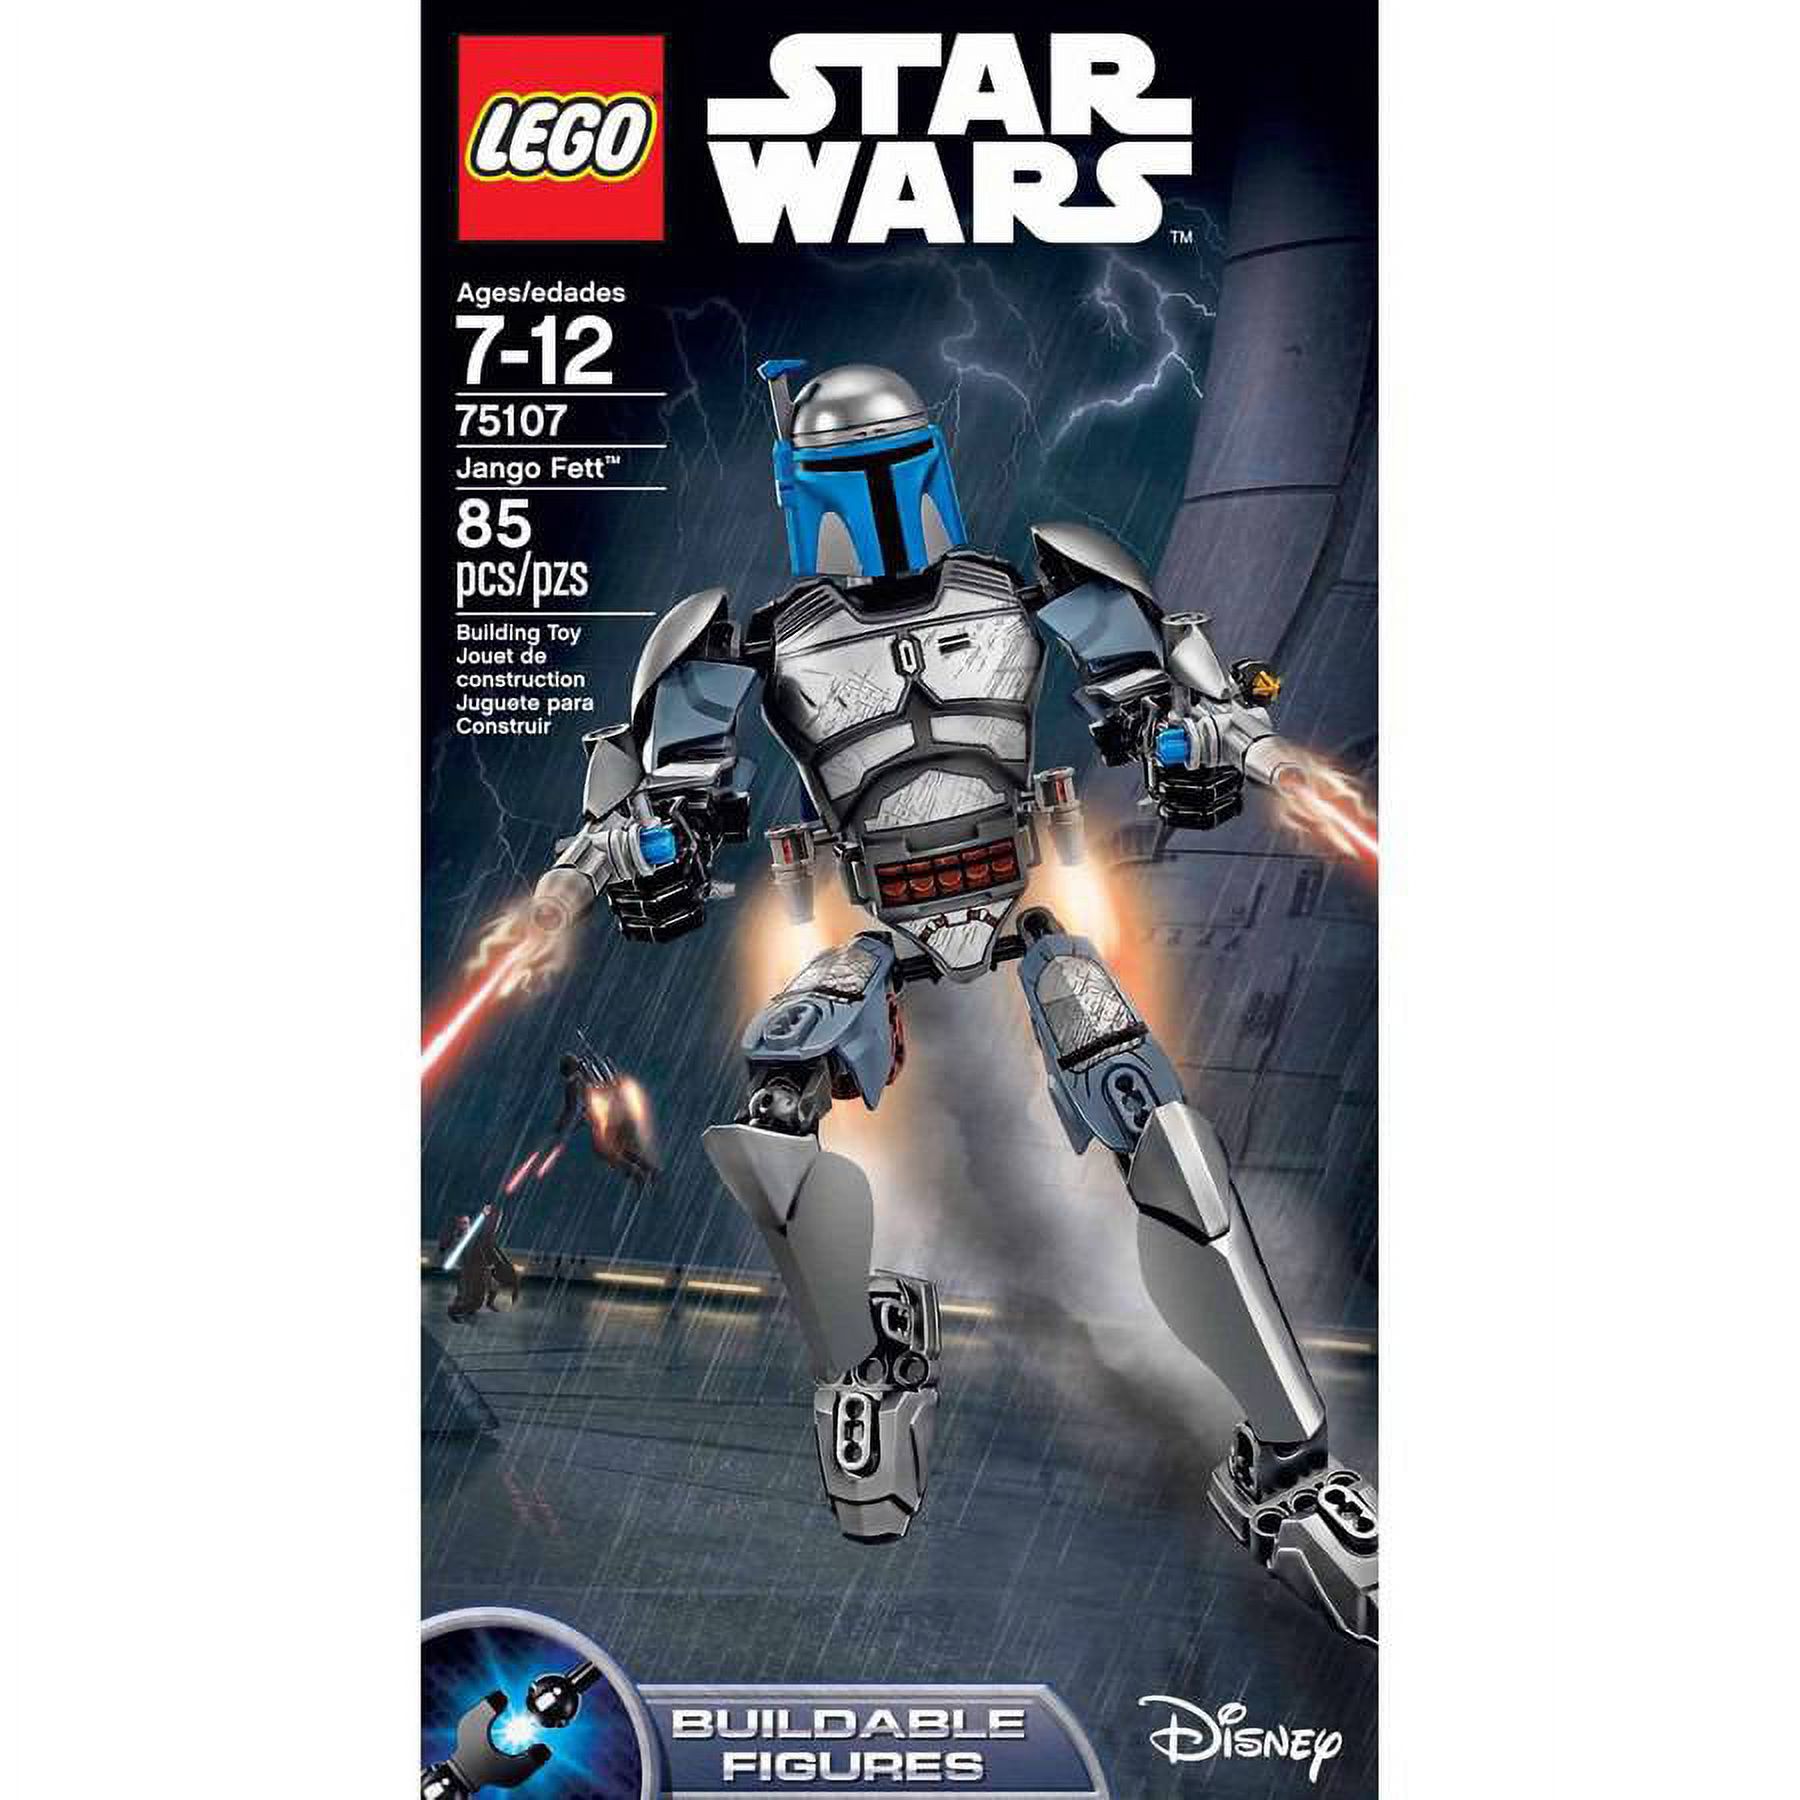 LEGO Star Wars 75107 Jango Fett Building Kit - image 2 of 5